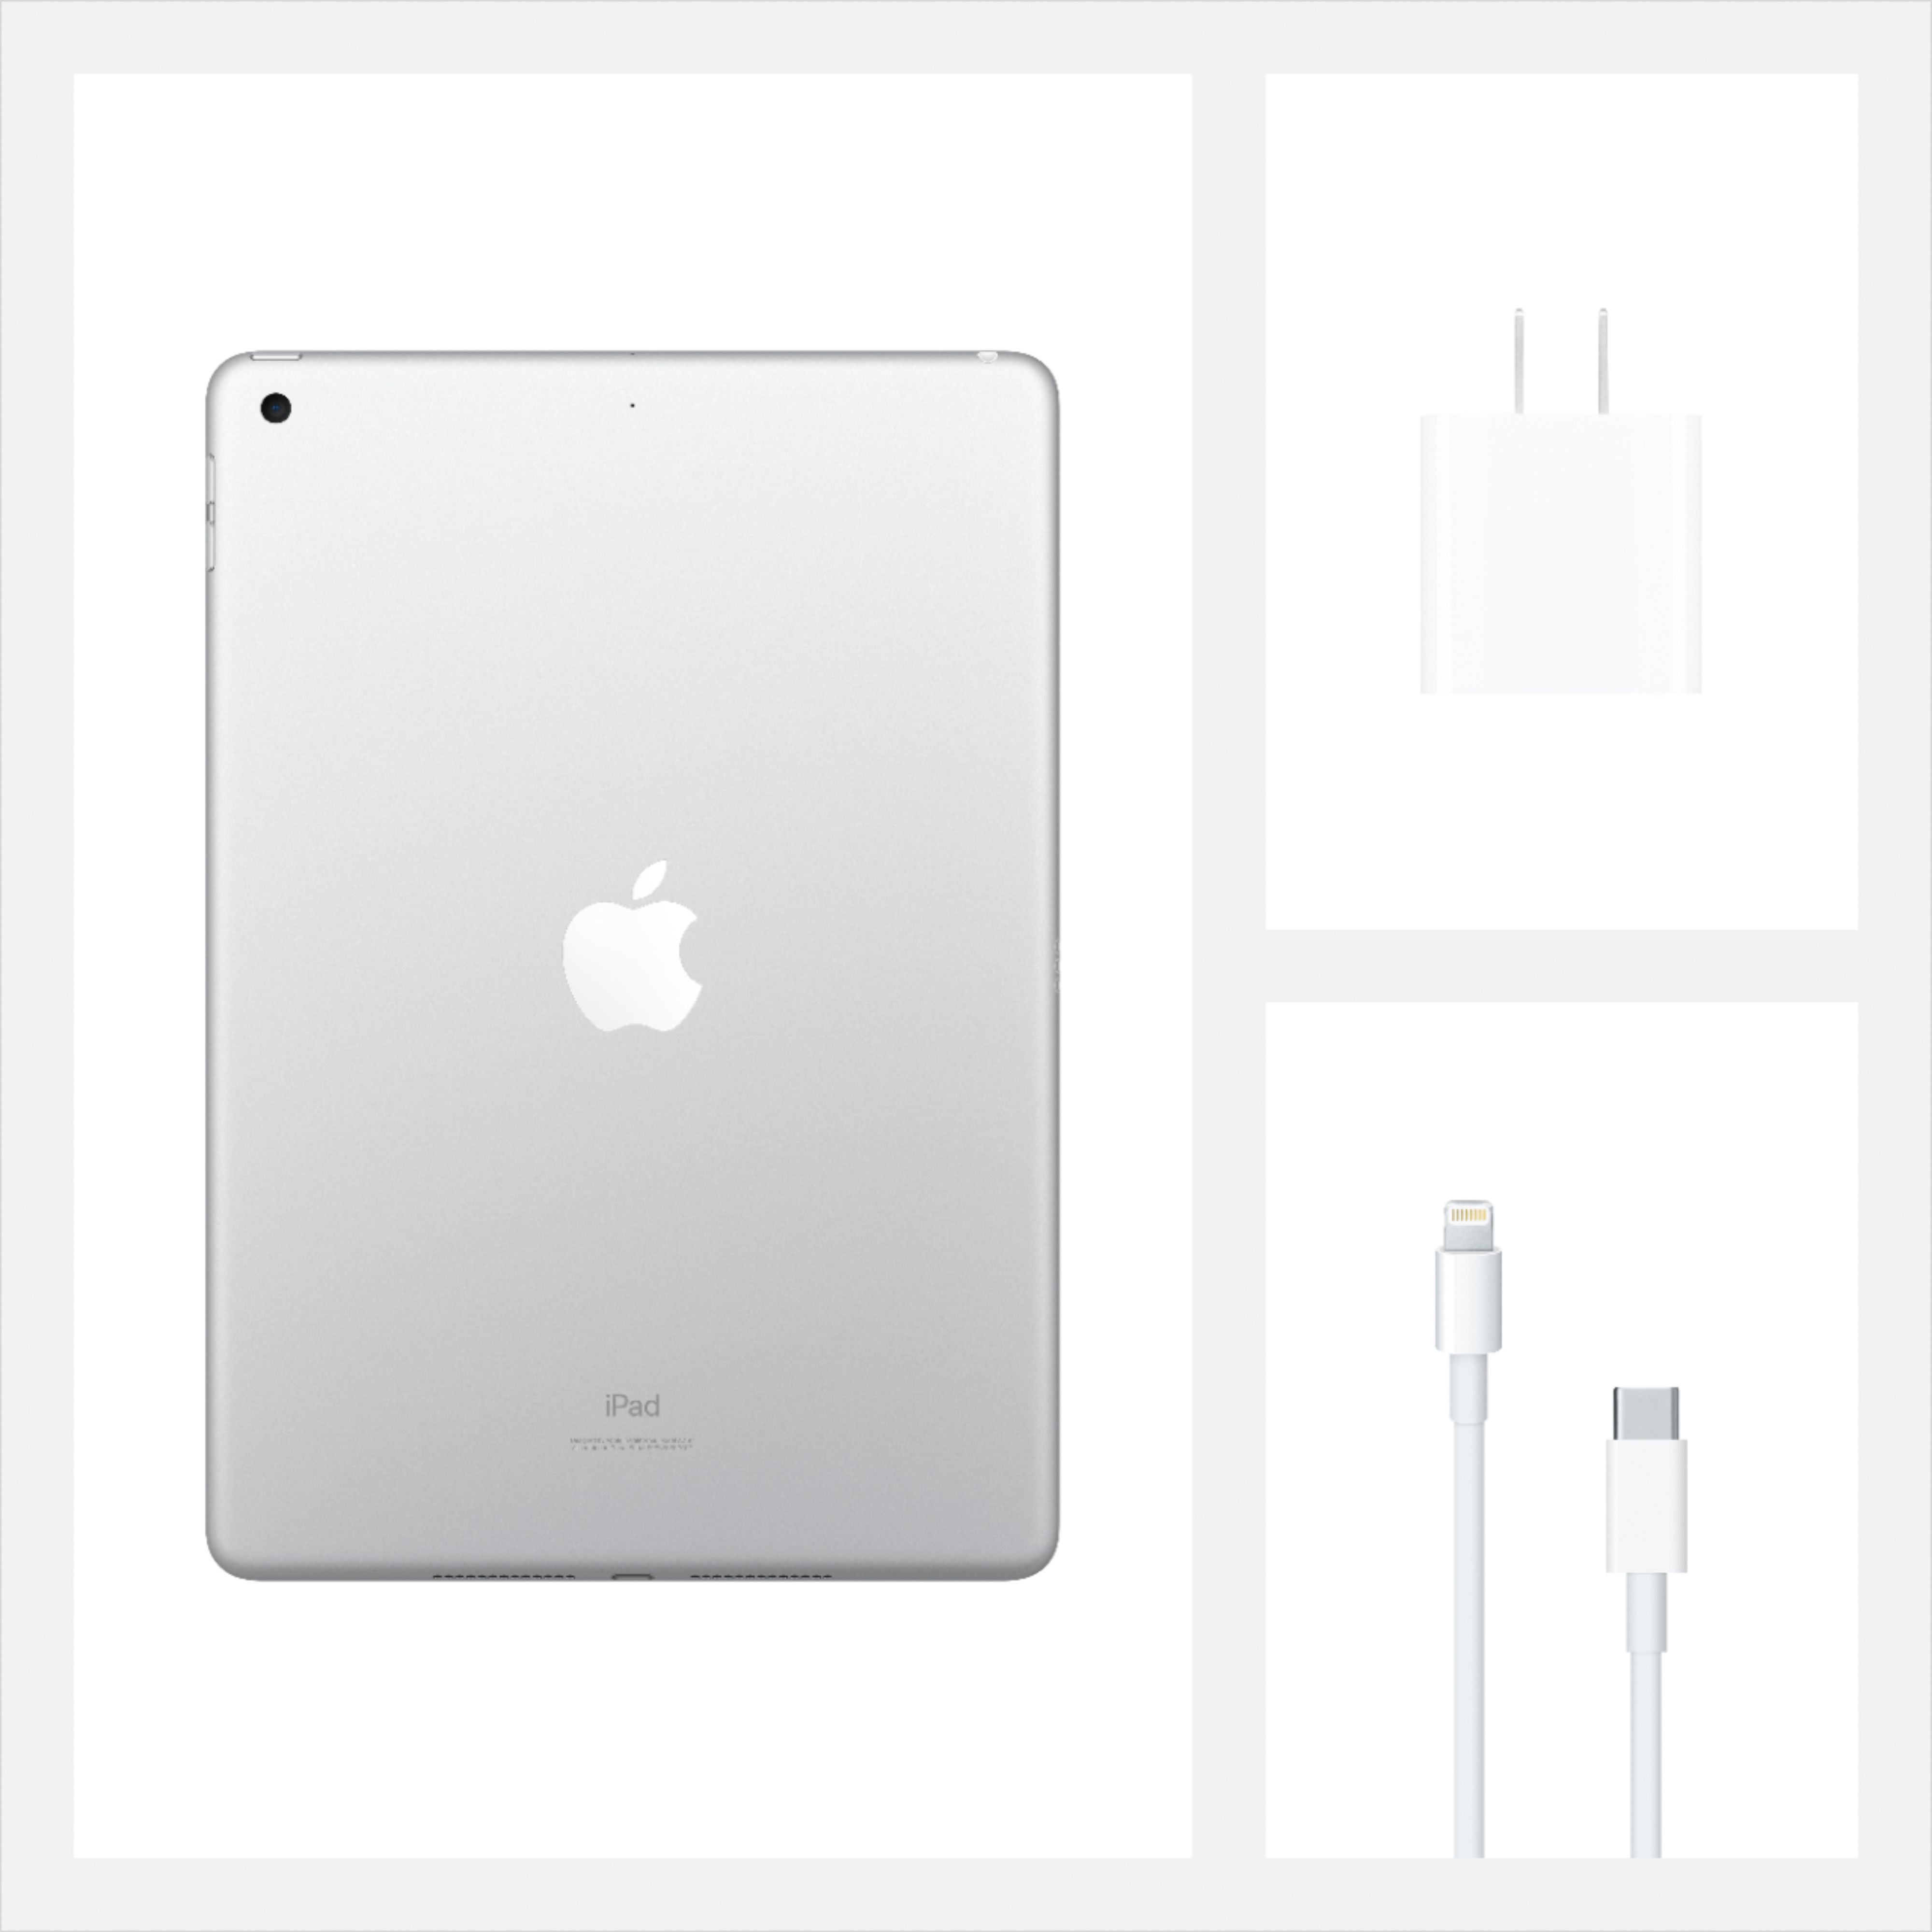 Refurbished iPad Wi-Fi 32GB - Space Grey (8th Generation) - Apple (IE)